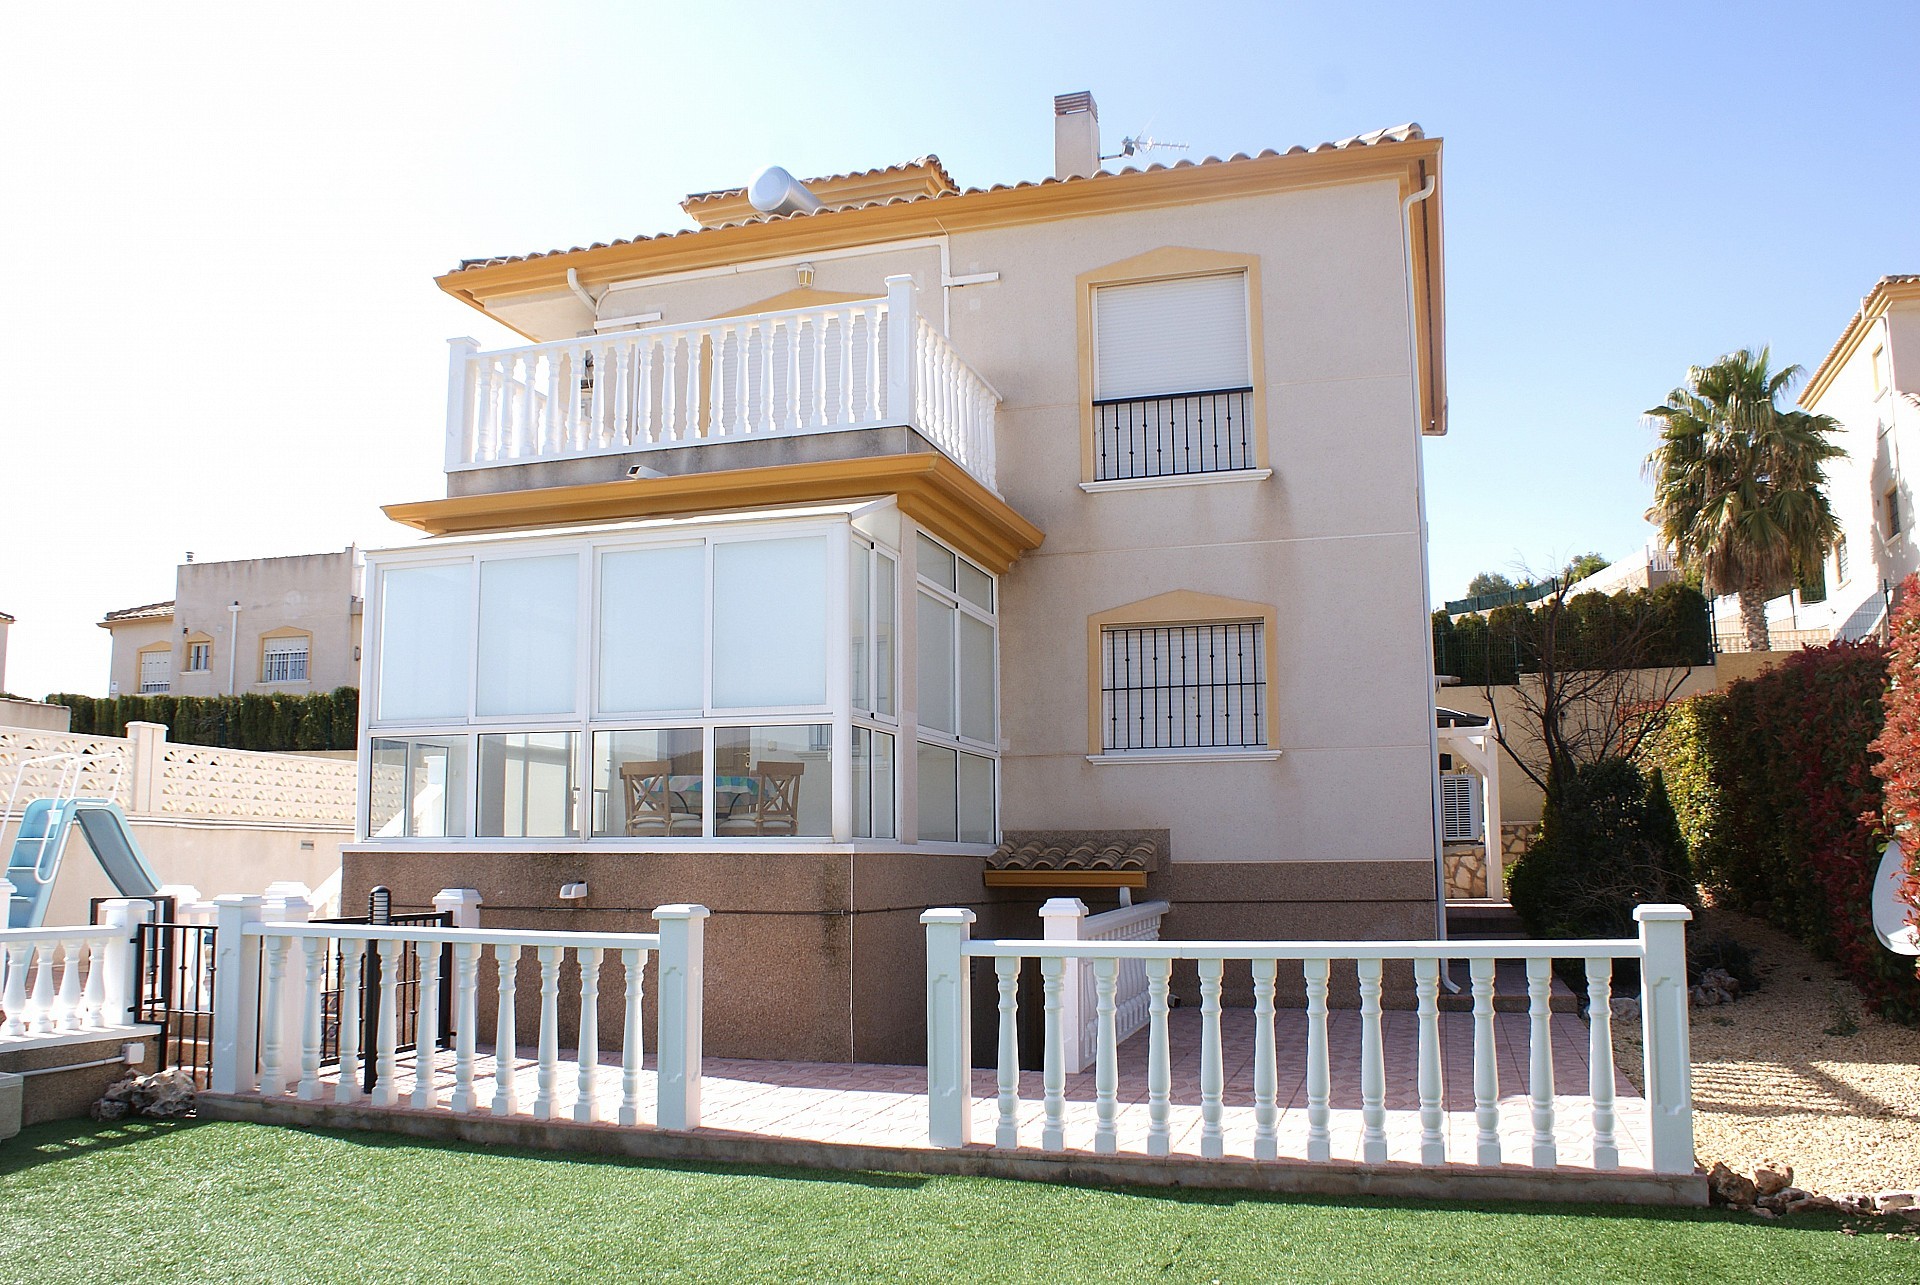 3 bedroom house / villa for sale in Castalla, Costa Blanca